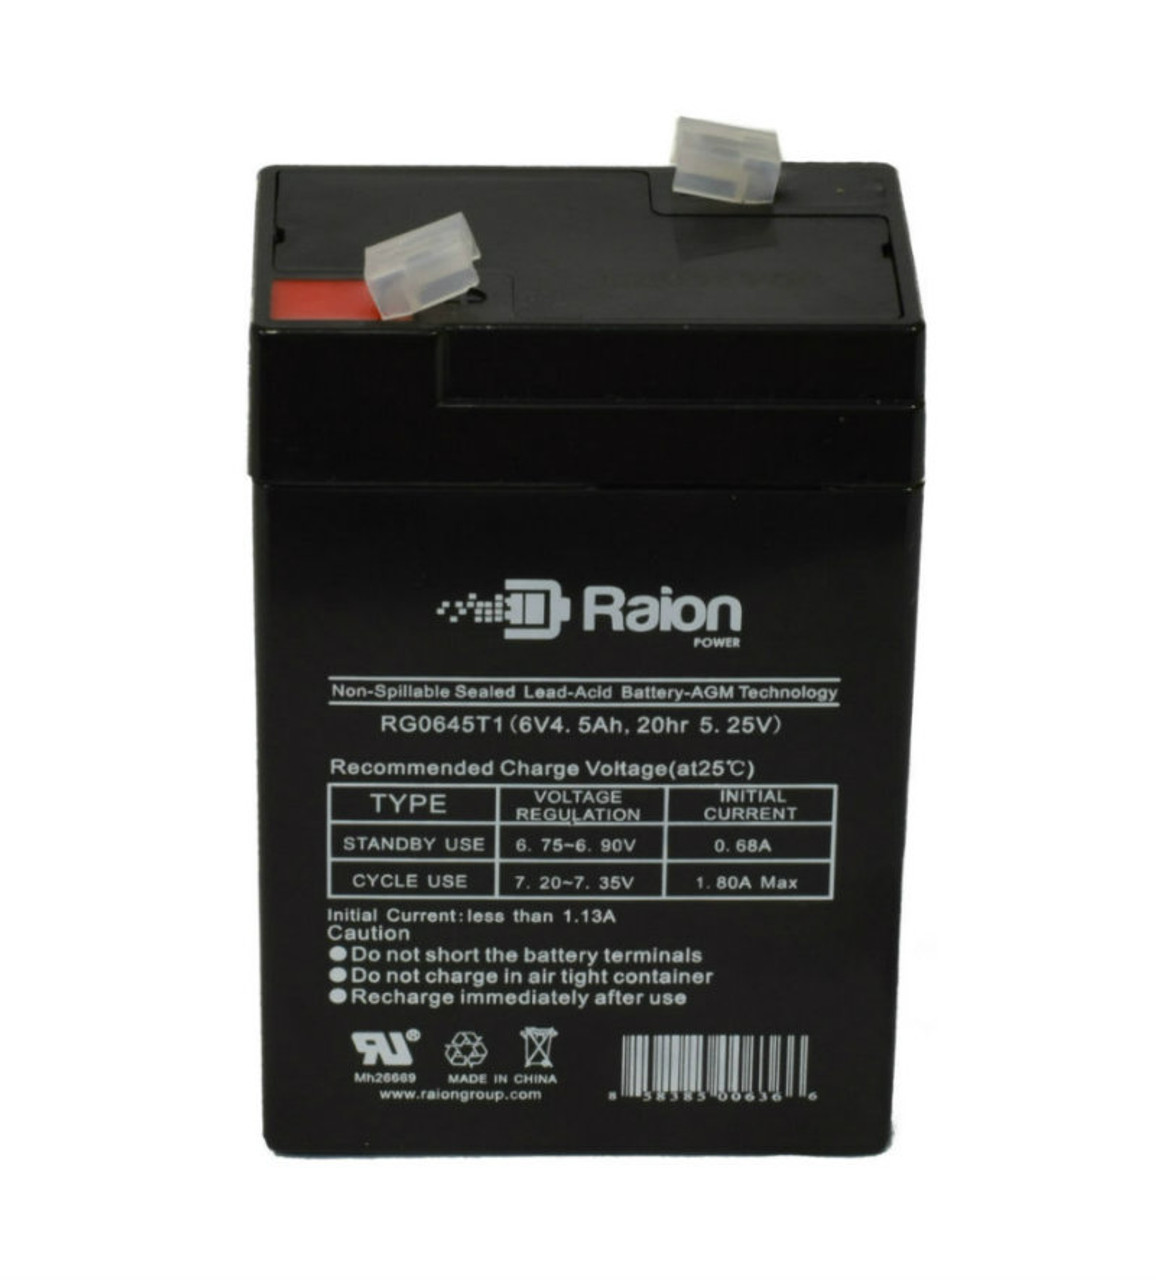 Raion Power RG0645T1 Replacement Battery Cartridge for DET Power SJ6V4.5Ah